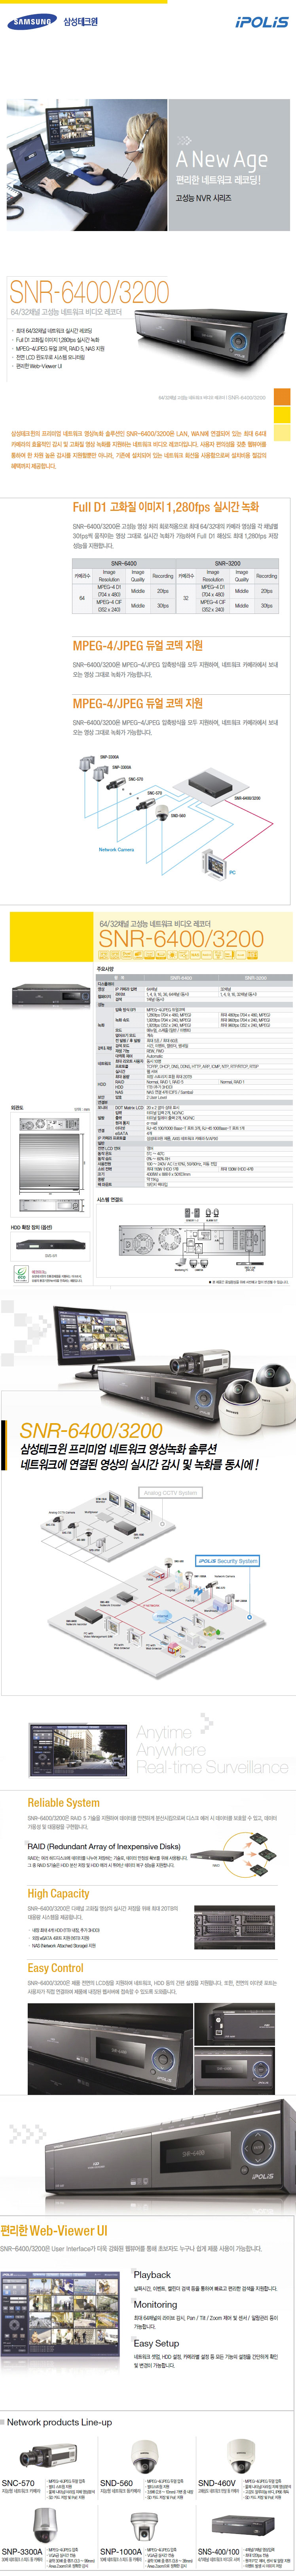 SNR-3200